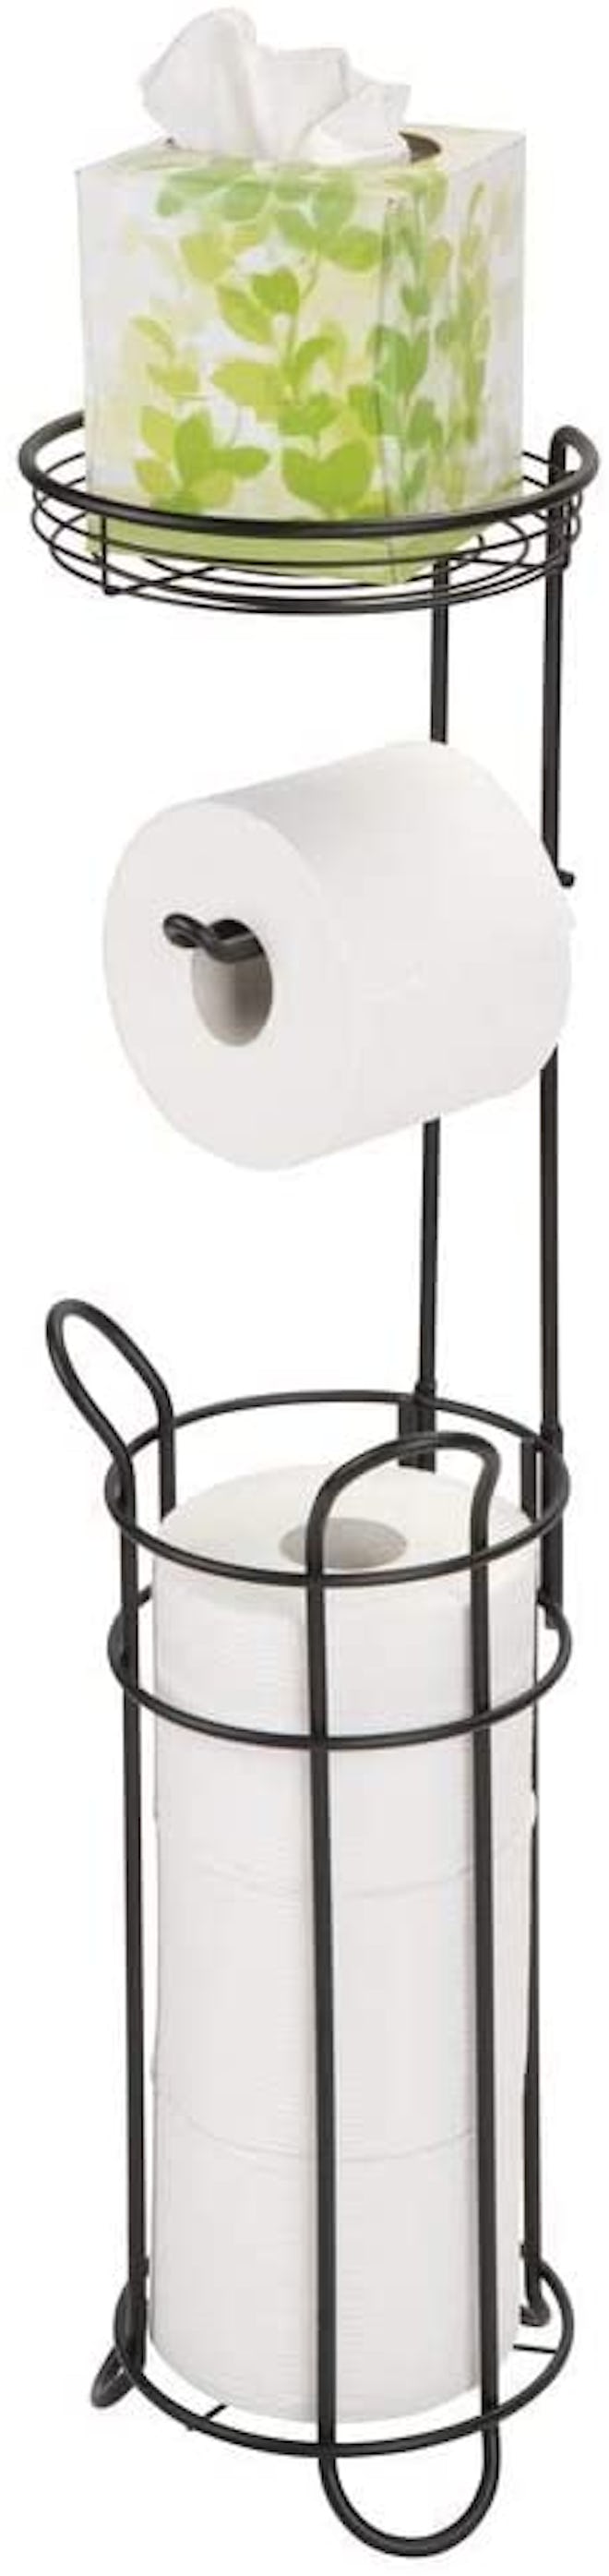 mDesign Free Standing Toilet Paper Holder